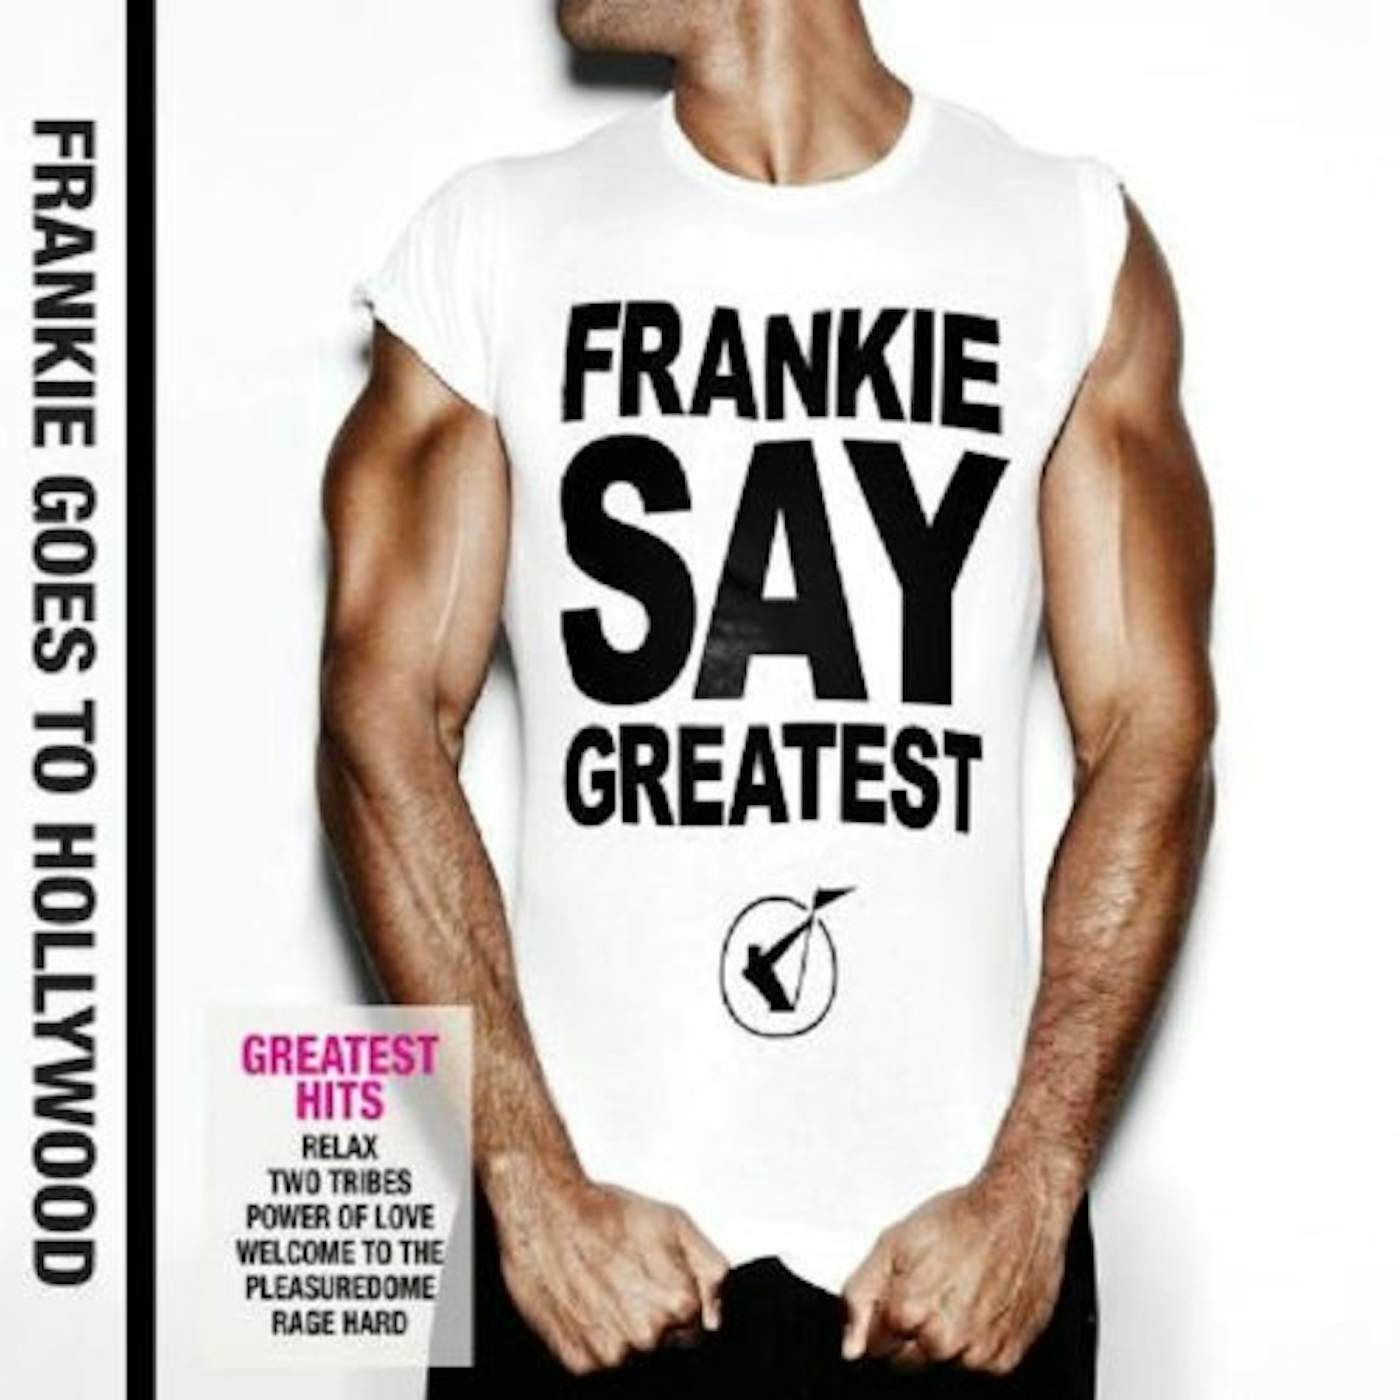 Frankie Goes To Hollywood FRANKIE SAY GREATEST CD